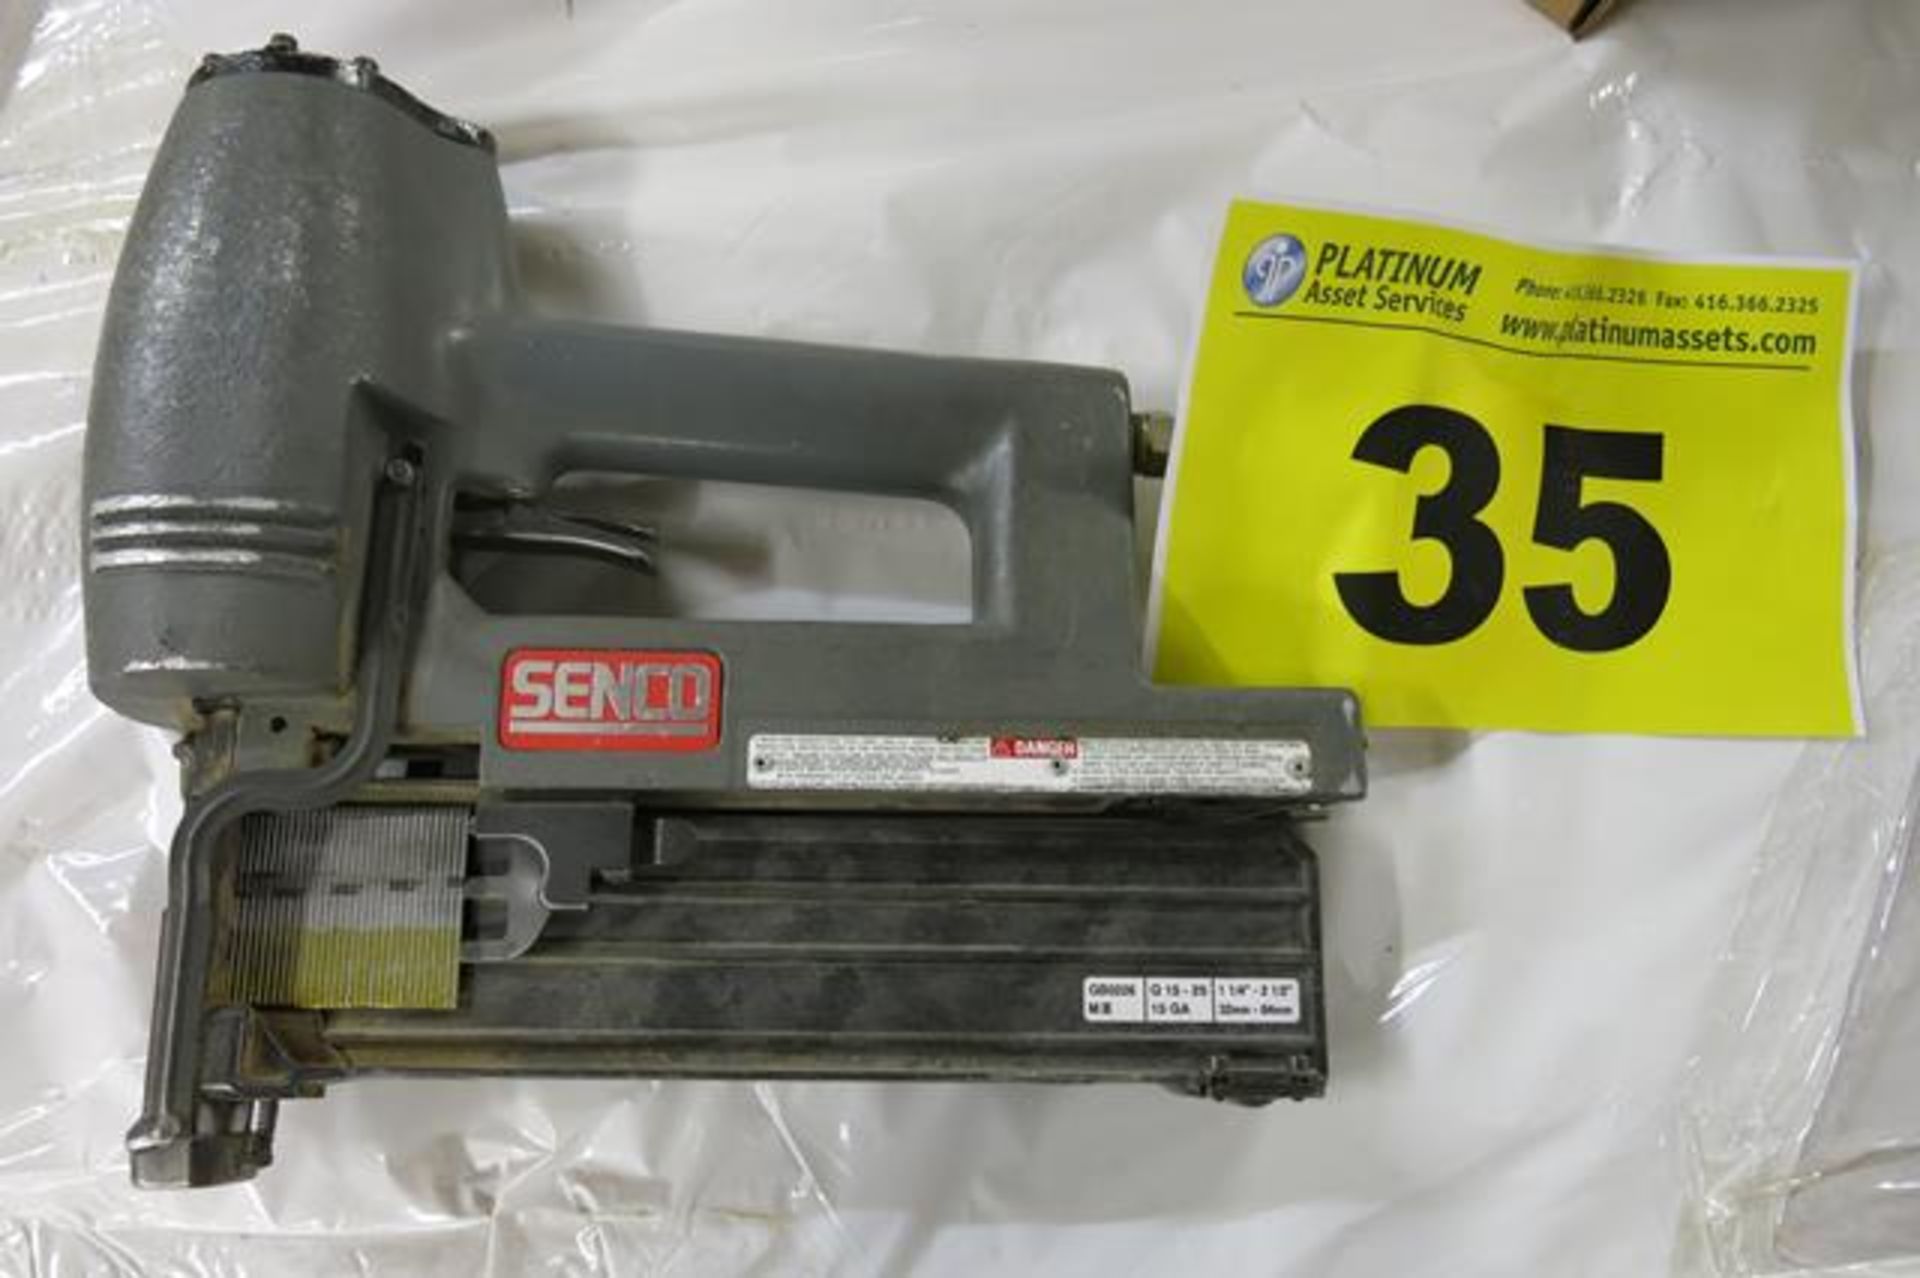 SENCO, GB0226, BRAD NAILER - Image 2 of 3